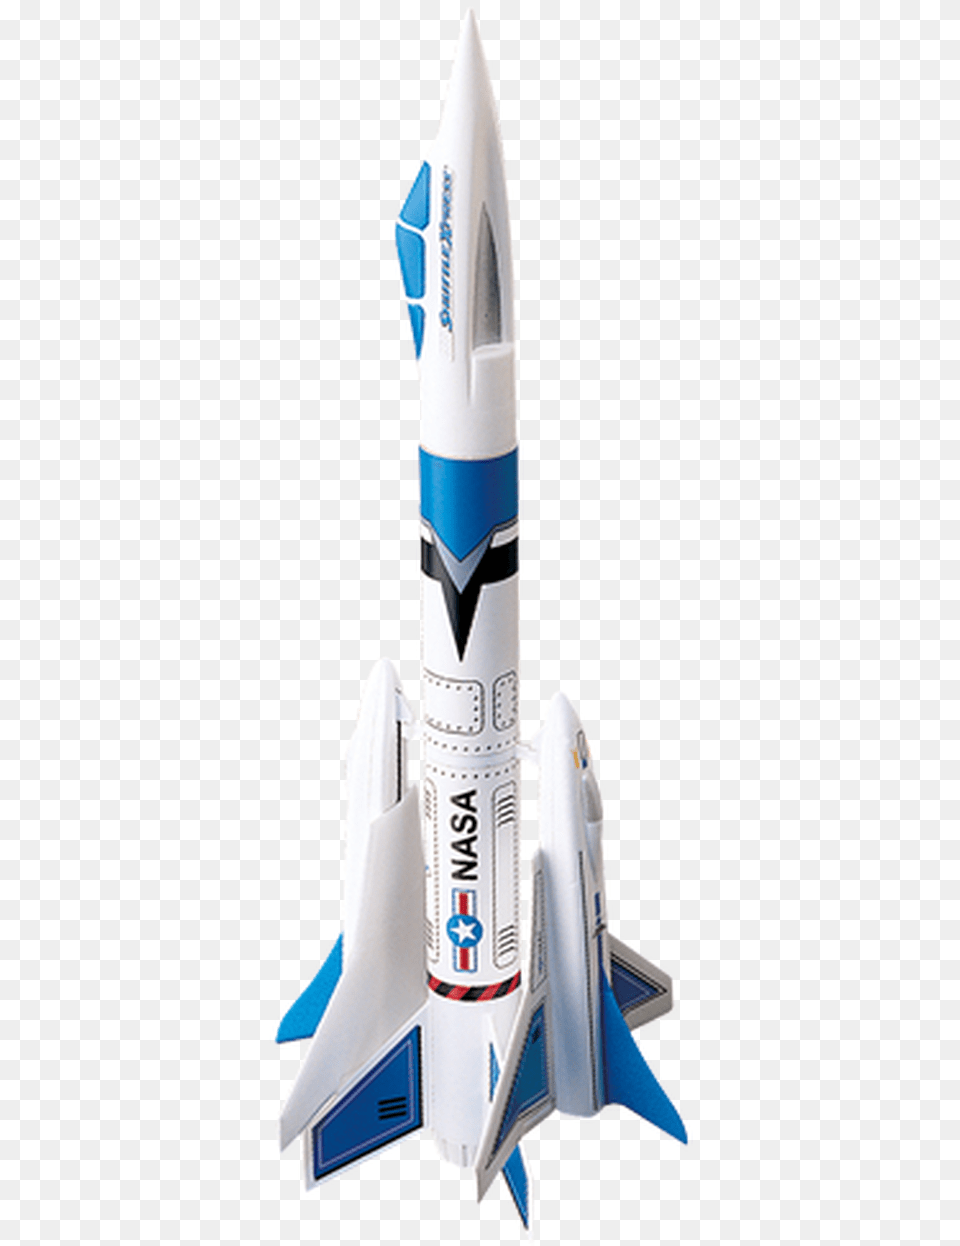 Shuttle Express Model Rocket And Gliders Raketa Model, Weapon, Aircraft, Transportation, Vehicle Png